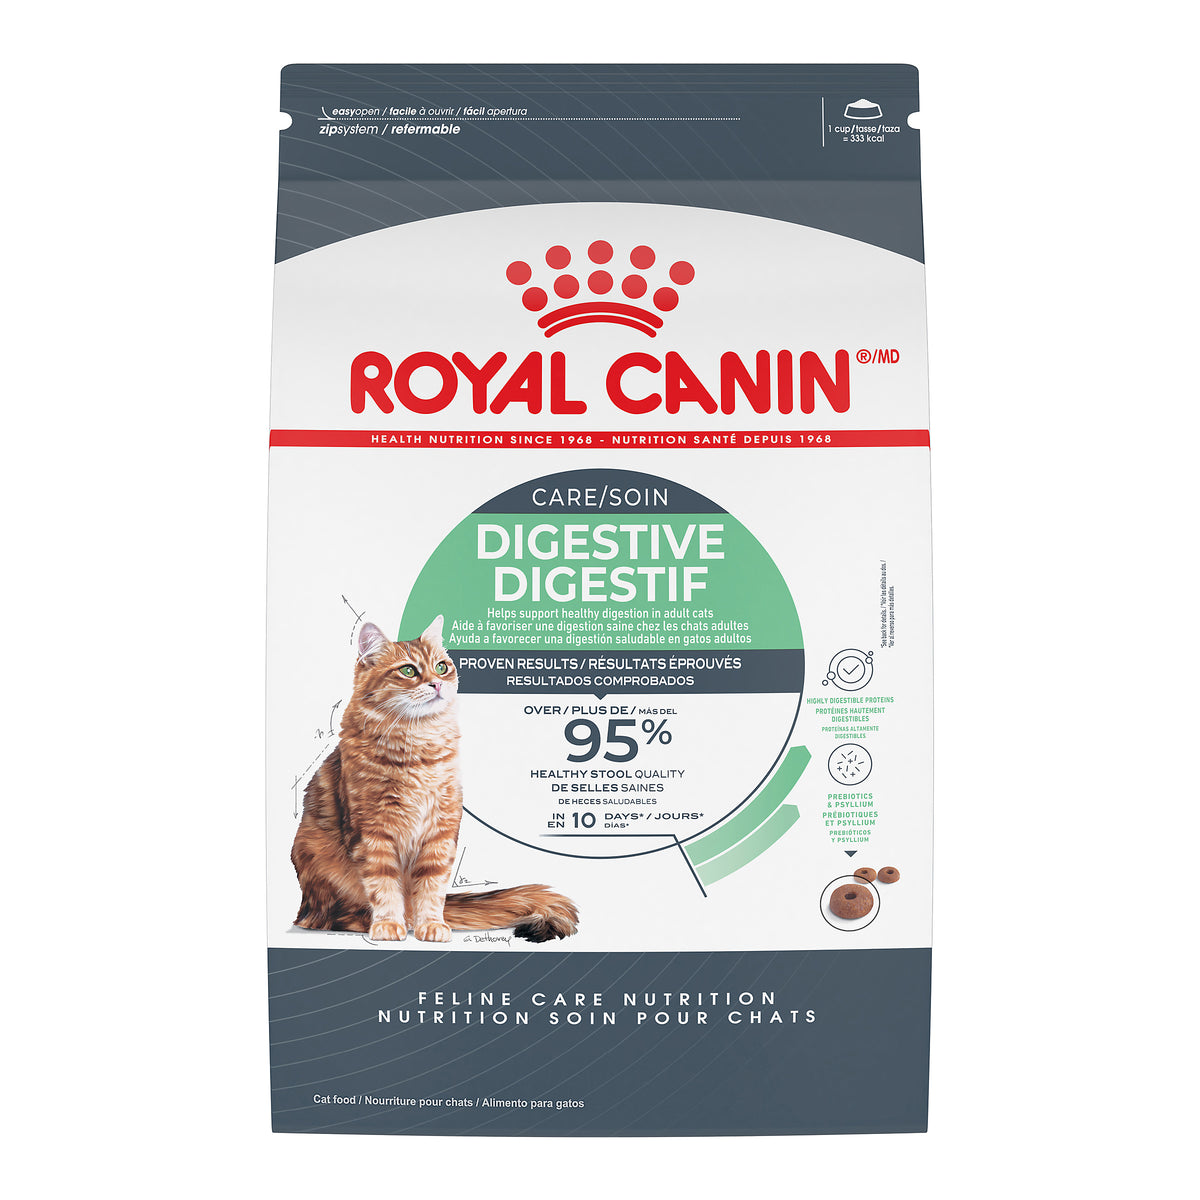 Royal Canin Digestive Comfort Cat Food